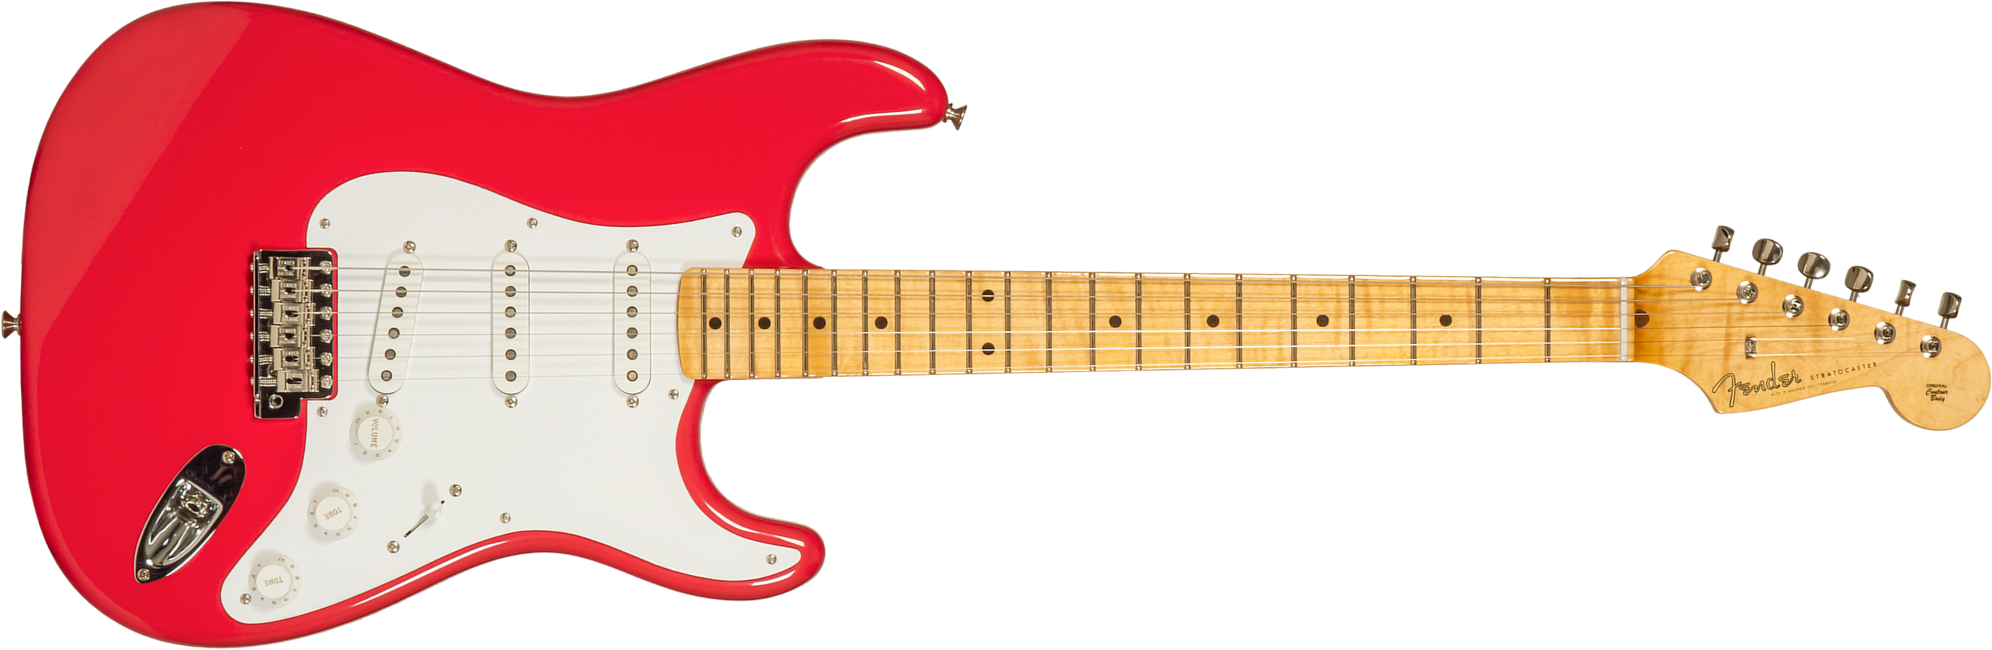 Fender Custom Shop Strat 1956 3s Trem Mn #r133022 - Nos Fiesta Red - Guitare Électrique Forme Str - Main picture